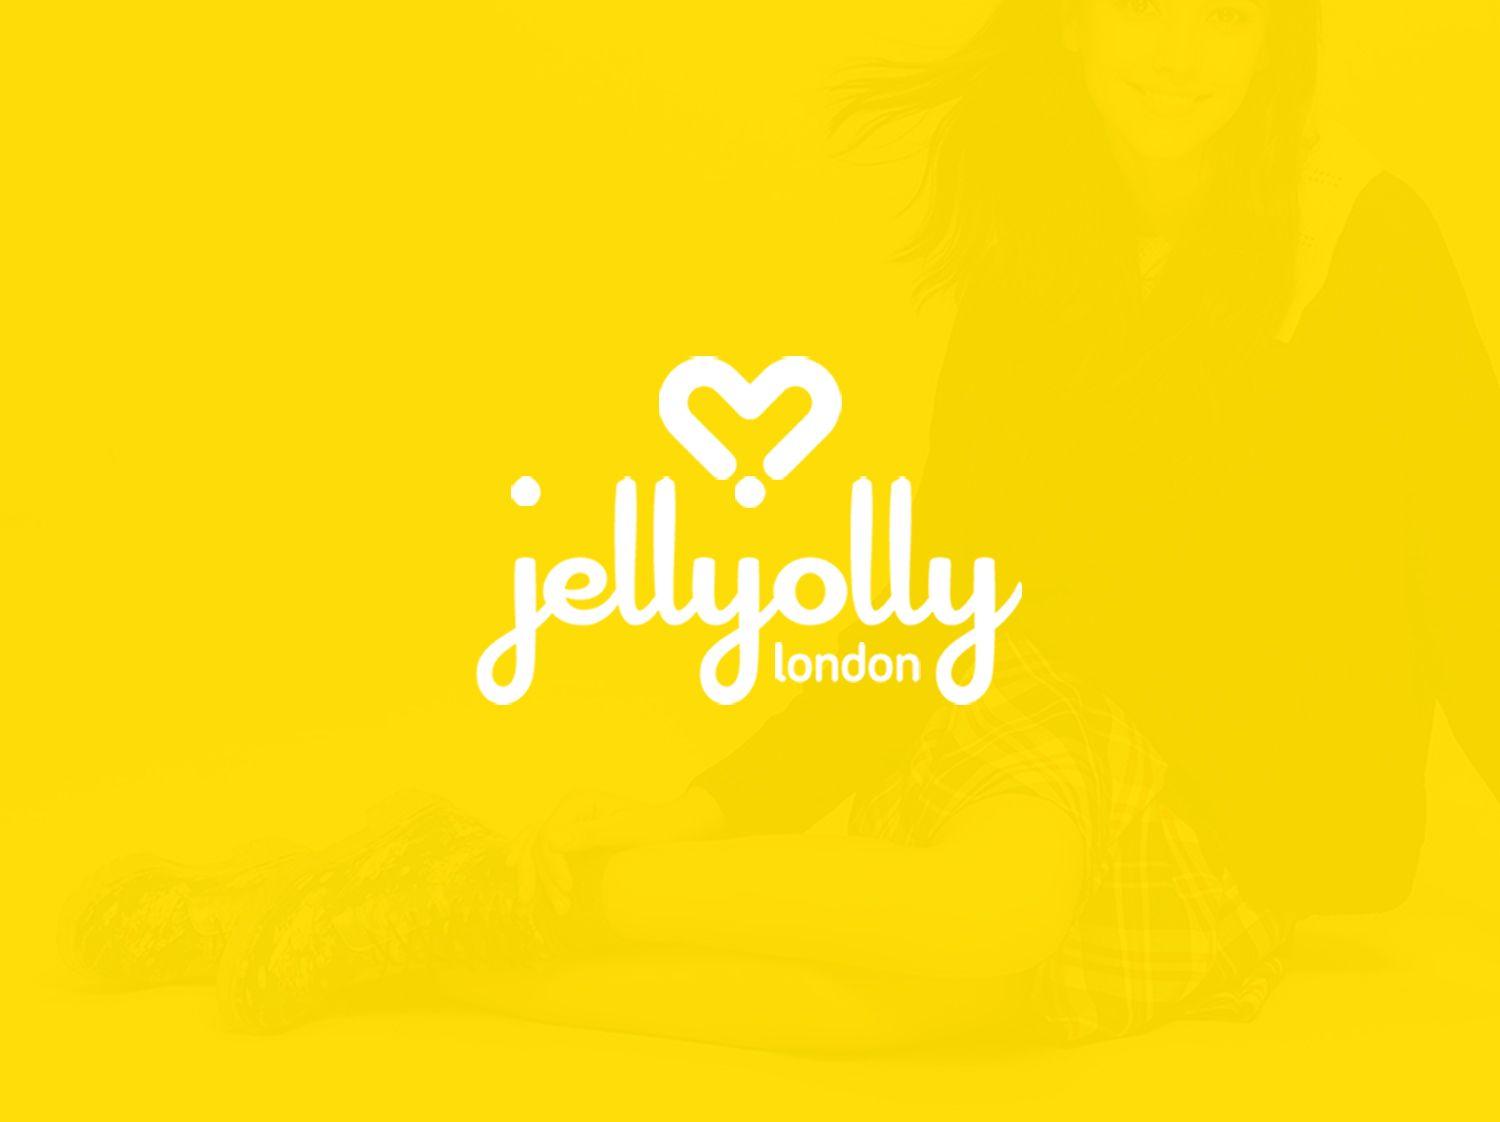 Jelly Logo - Jelly Jolly London branding and logo design. OM Studio London